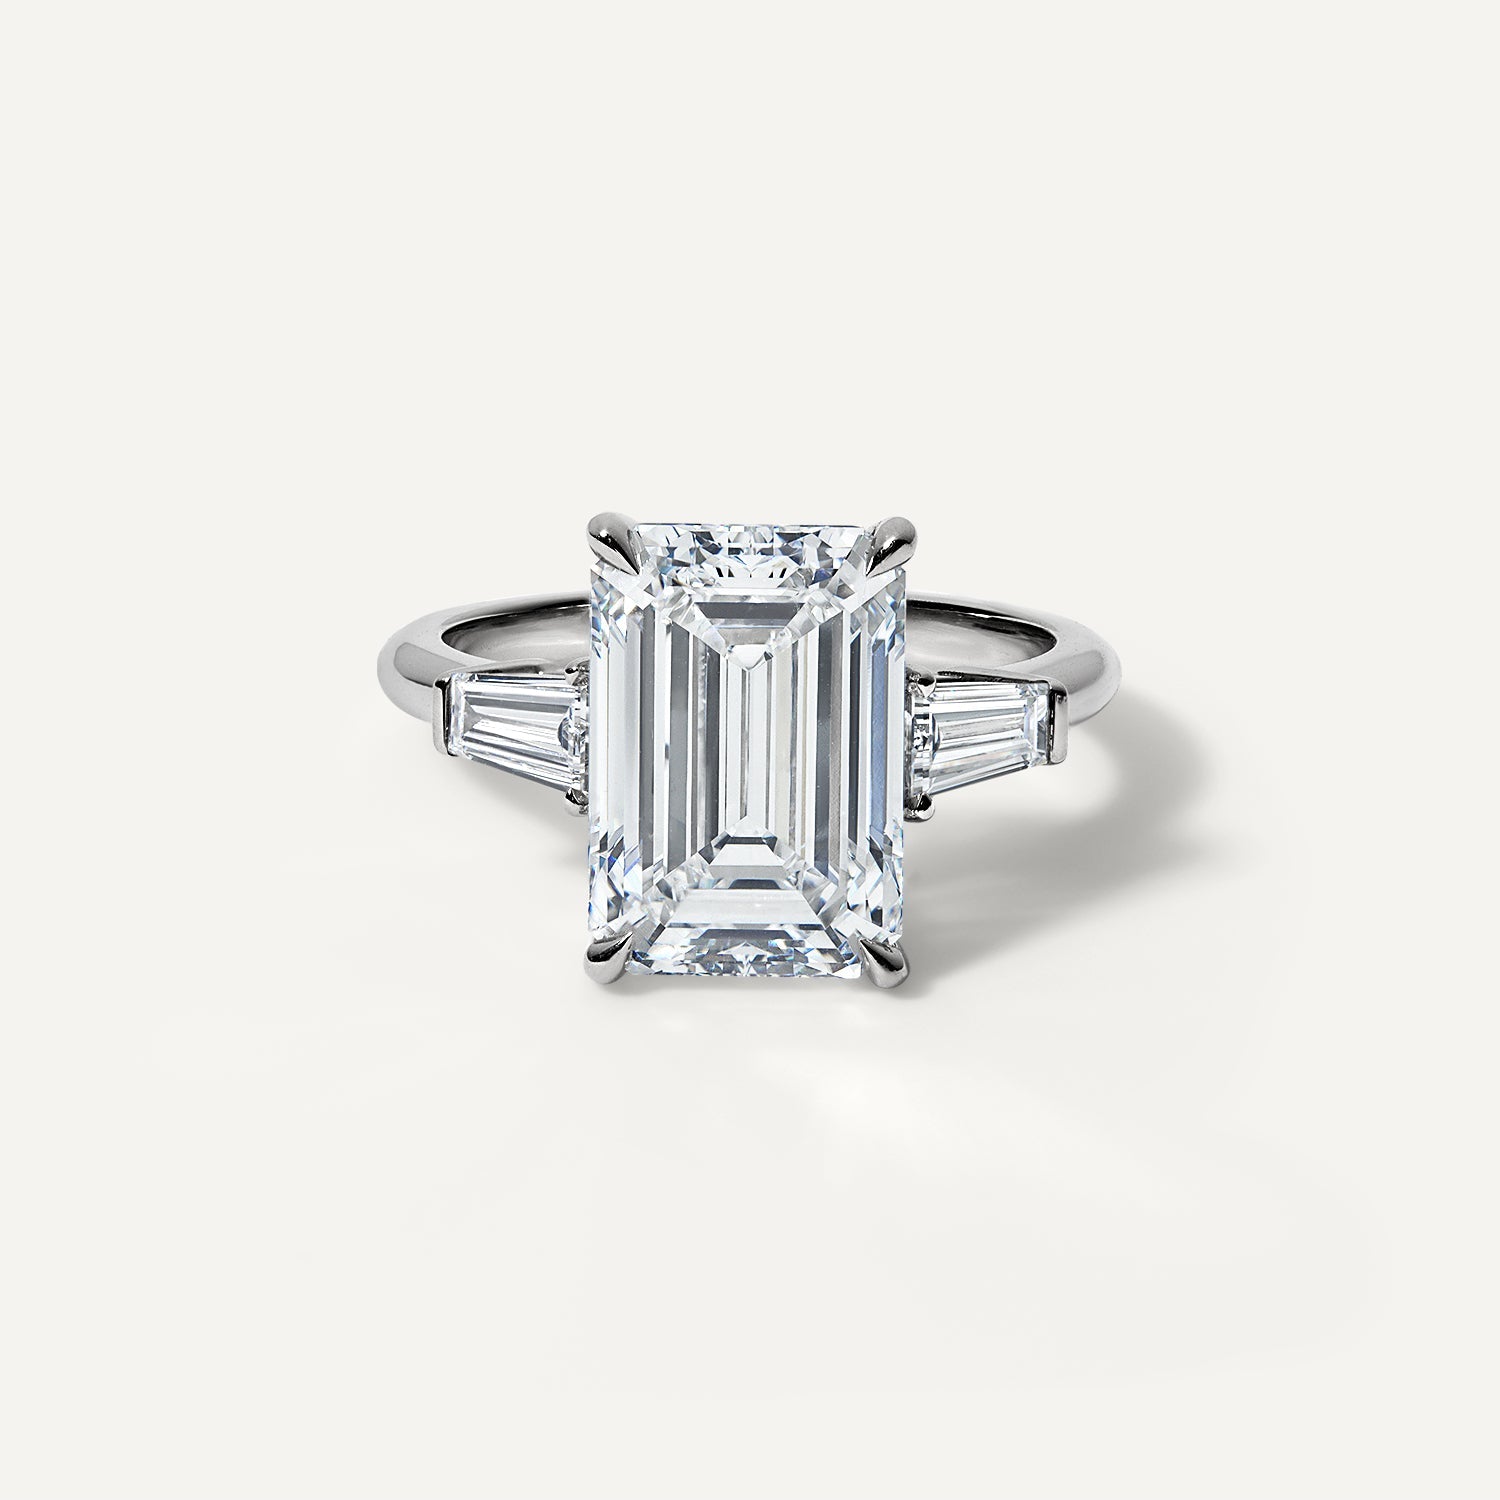 Three stone emerald lab diamond engagement ring.